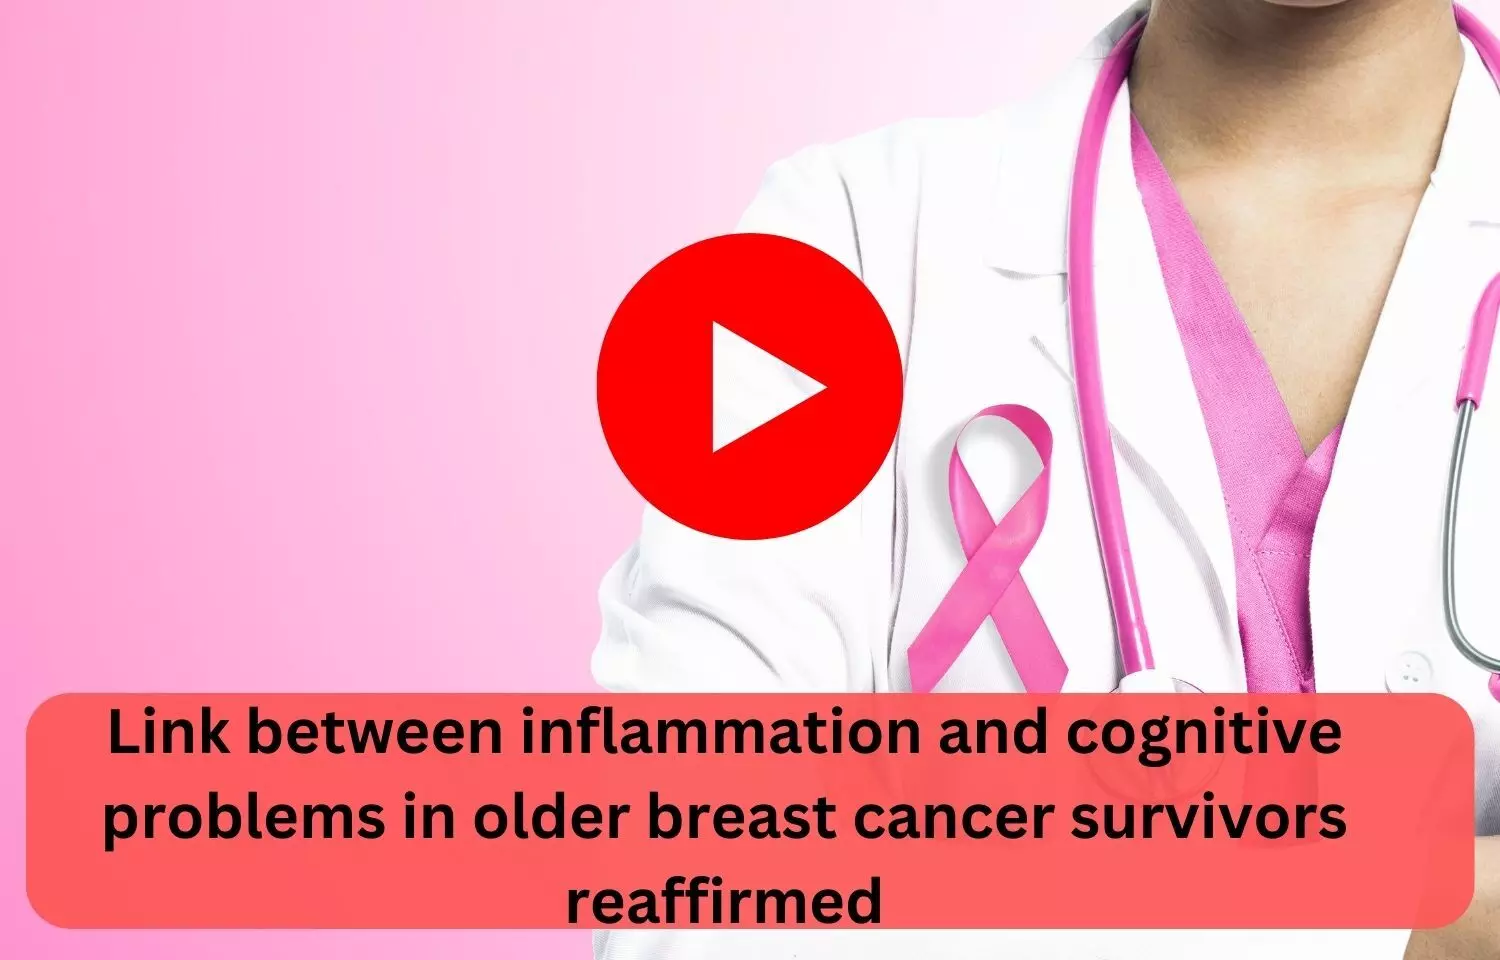 Link between inflammation and cognitive problems in older breast cancer survivors reaffirmed